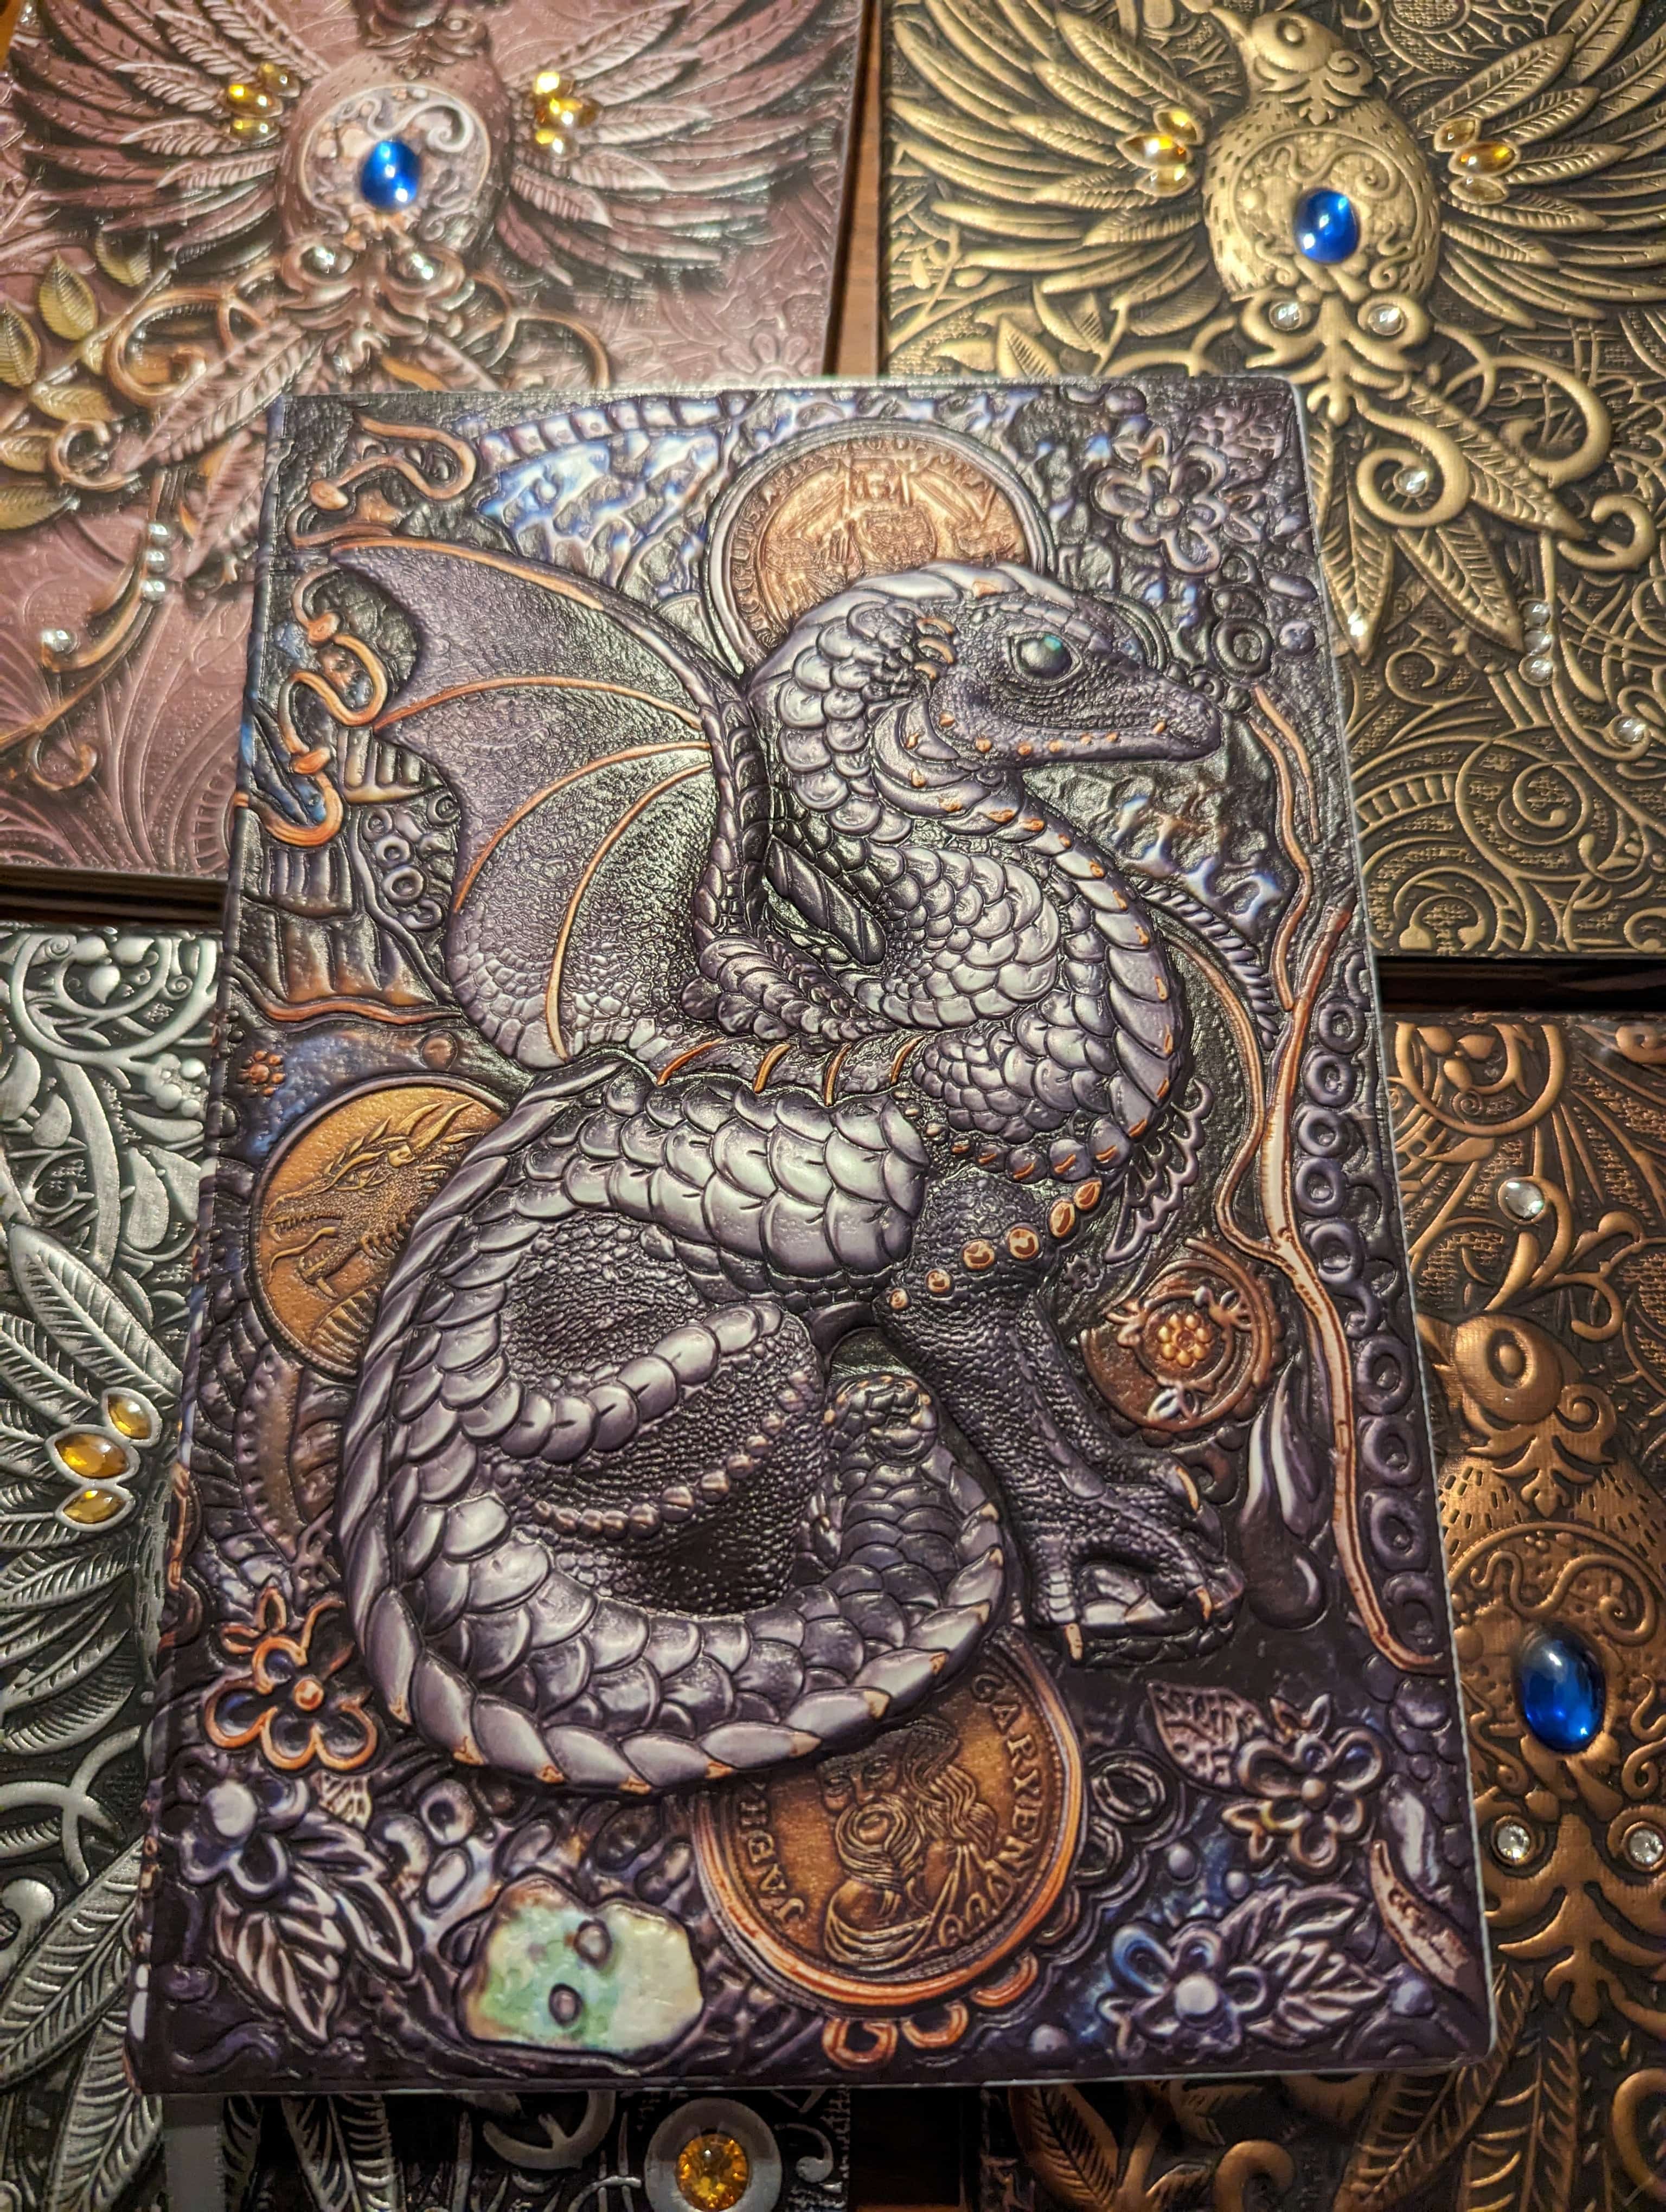 NordicDice Accessories, bøger etc Celestial Dragon notebook